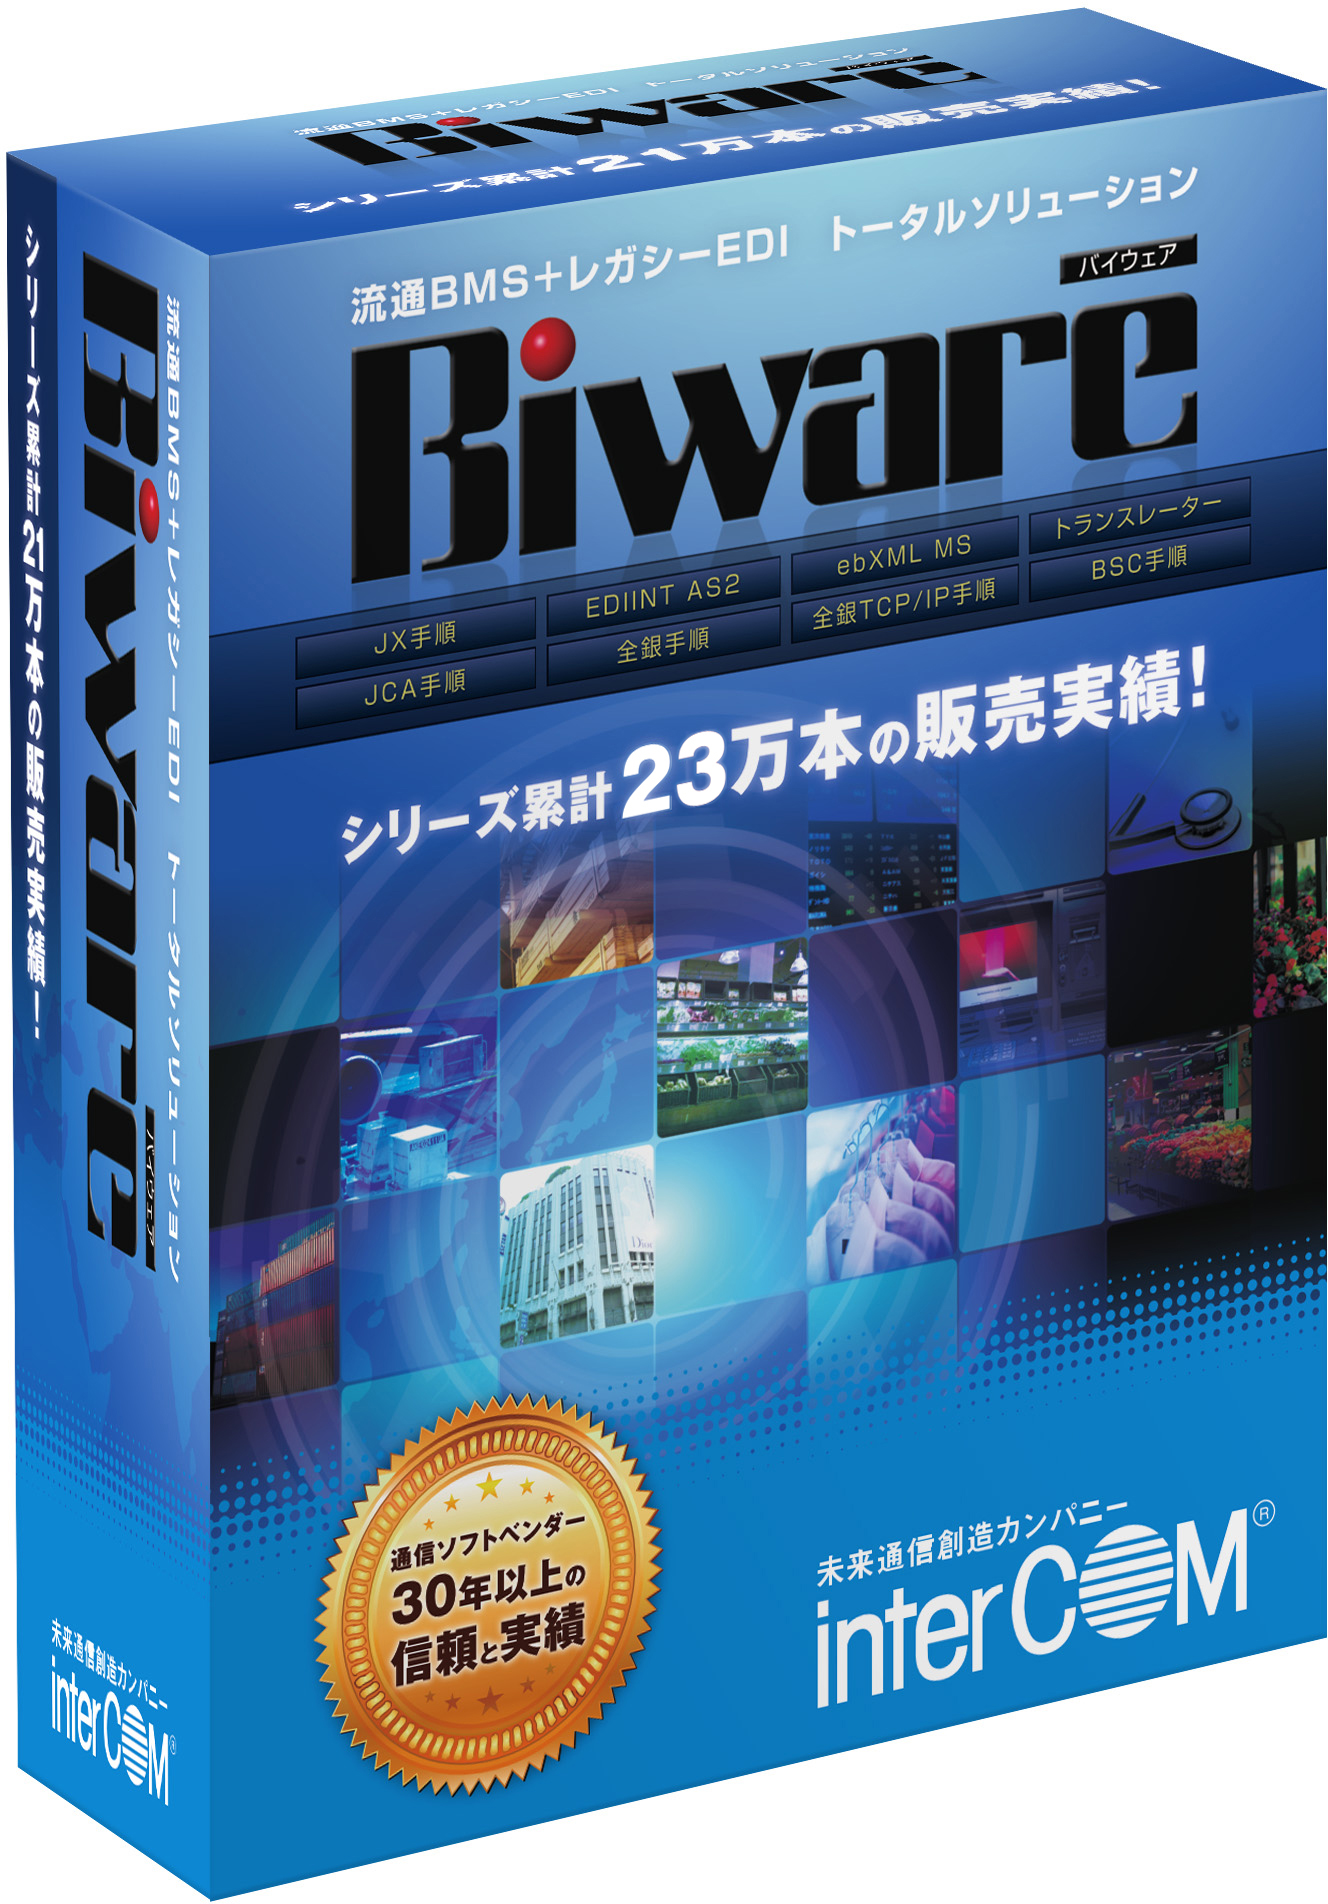 Edi Eai向けデータ変換ソフト Biware Easyexchange Ver 2 を新発売 インターコム